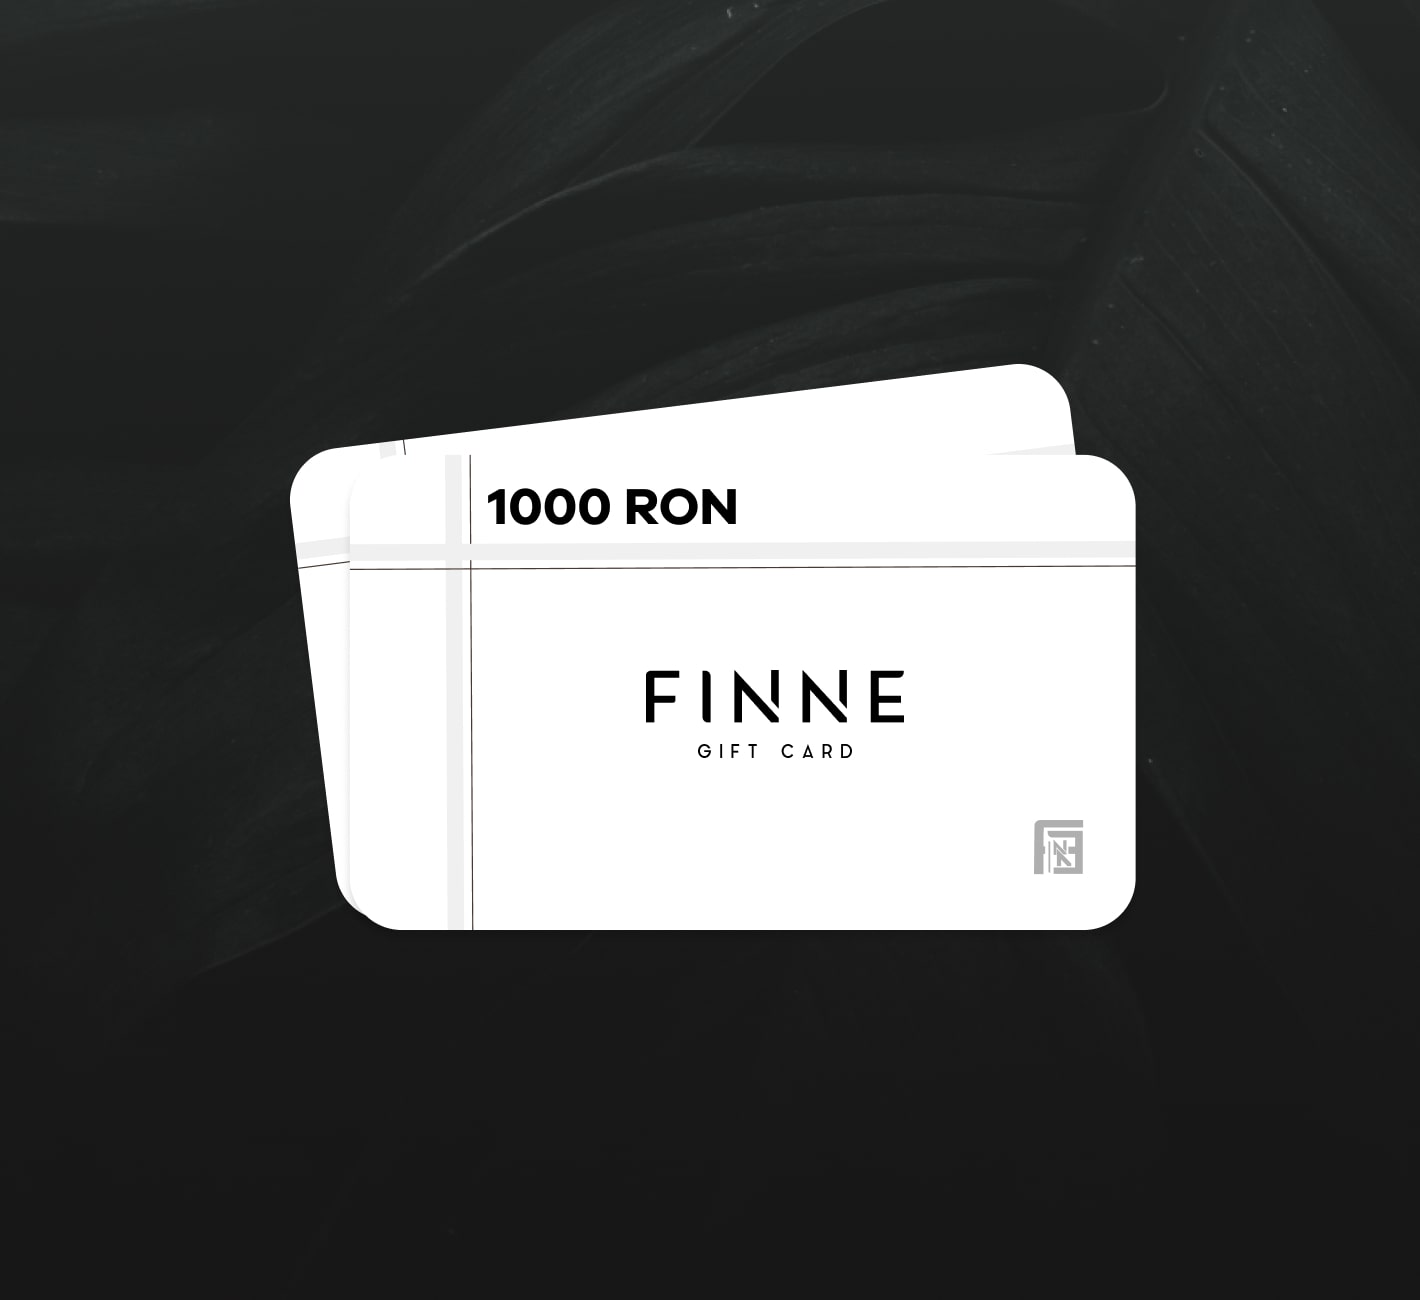 Finne Gift card 1000